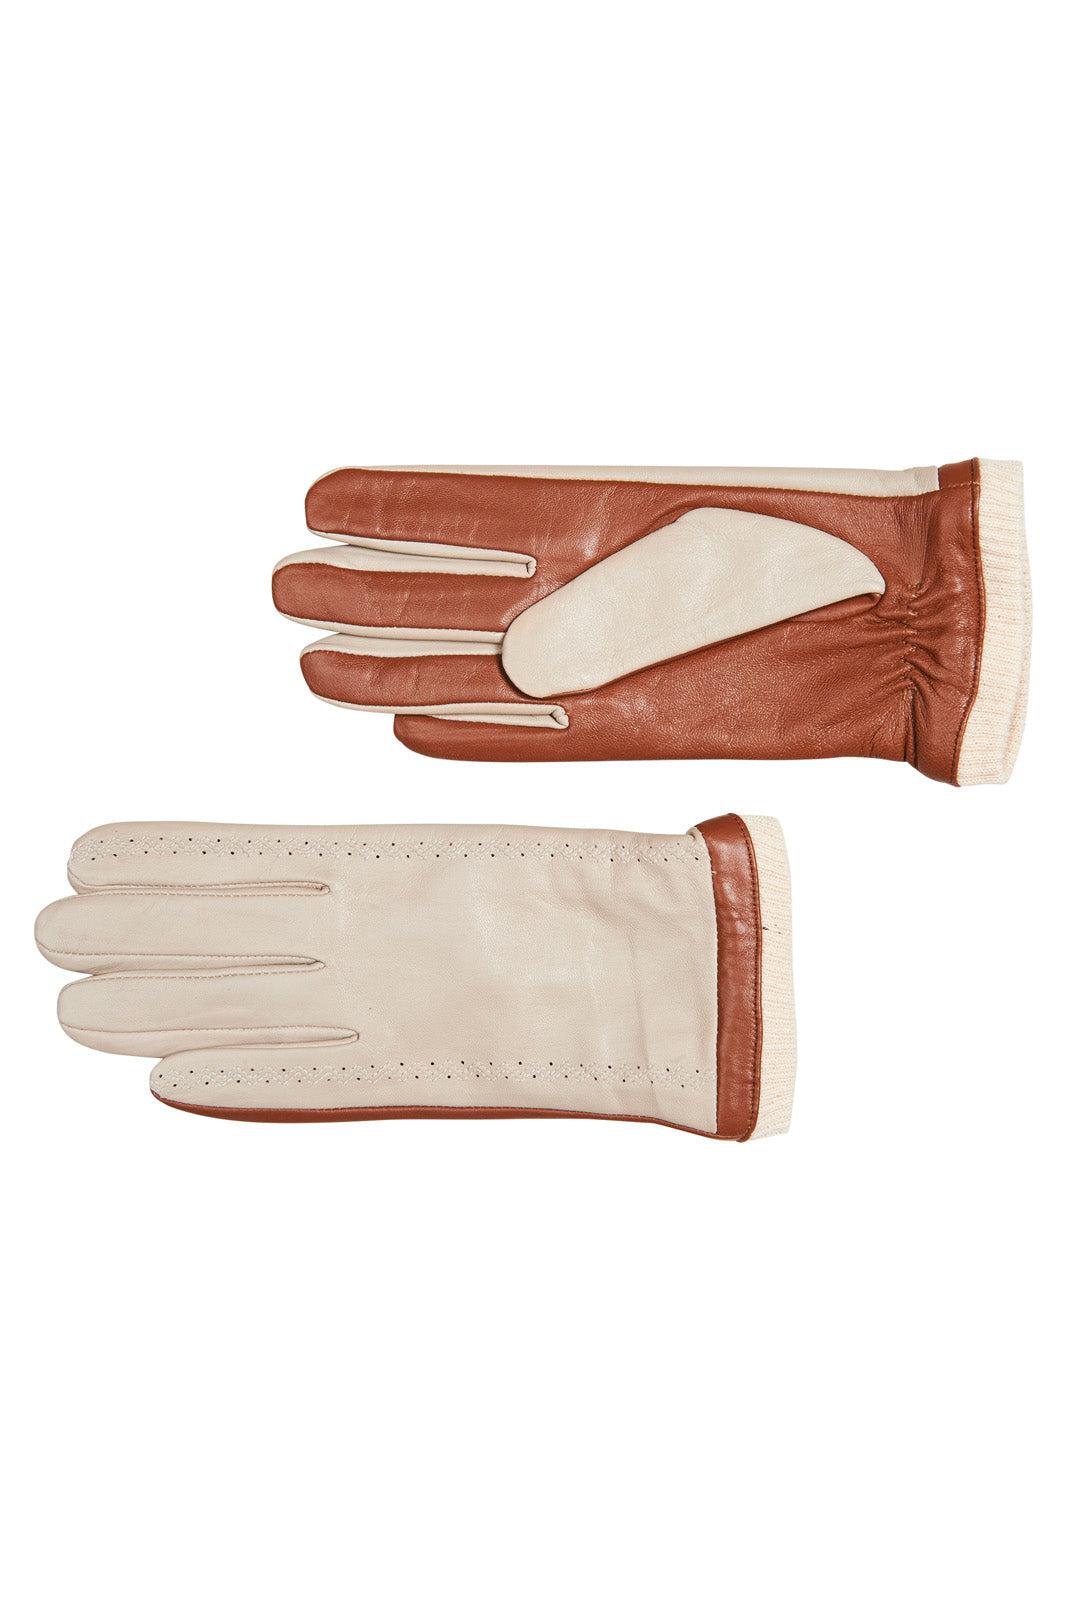 Mona Glove - Tan-Scarves, Belts & Gloves-Eb & Ive-The Bay Room